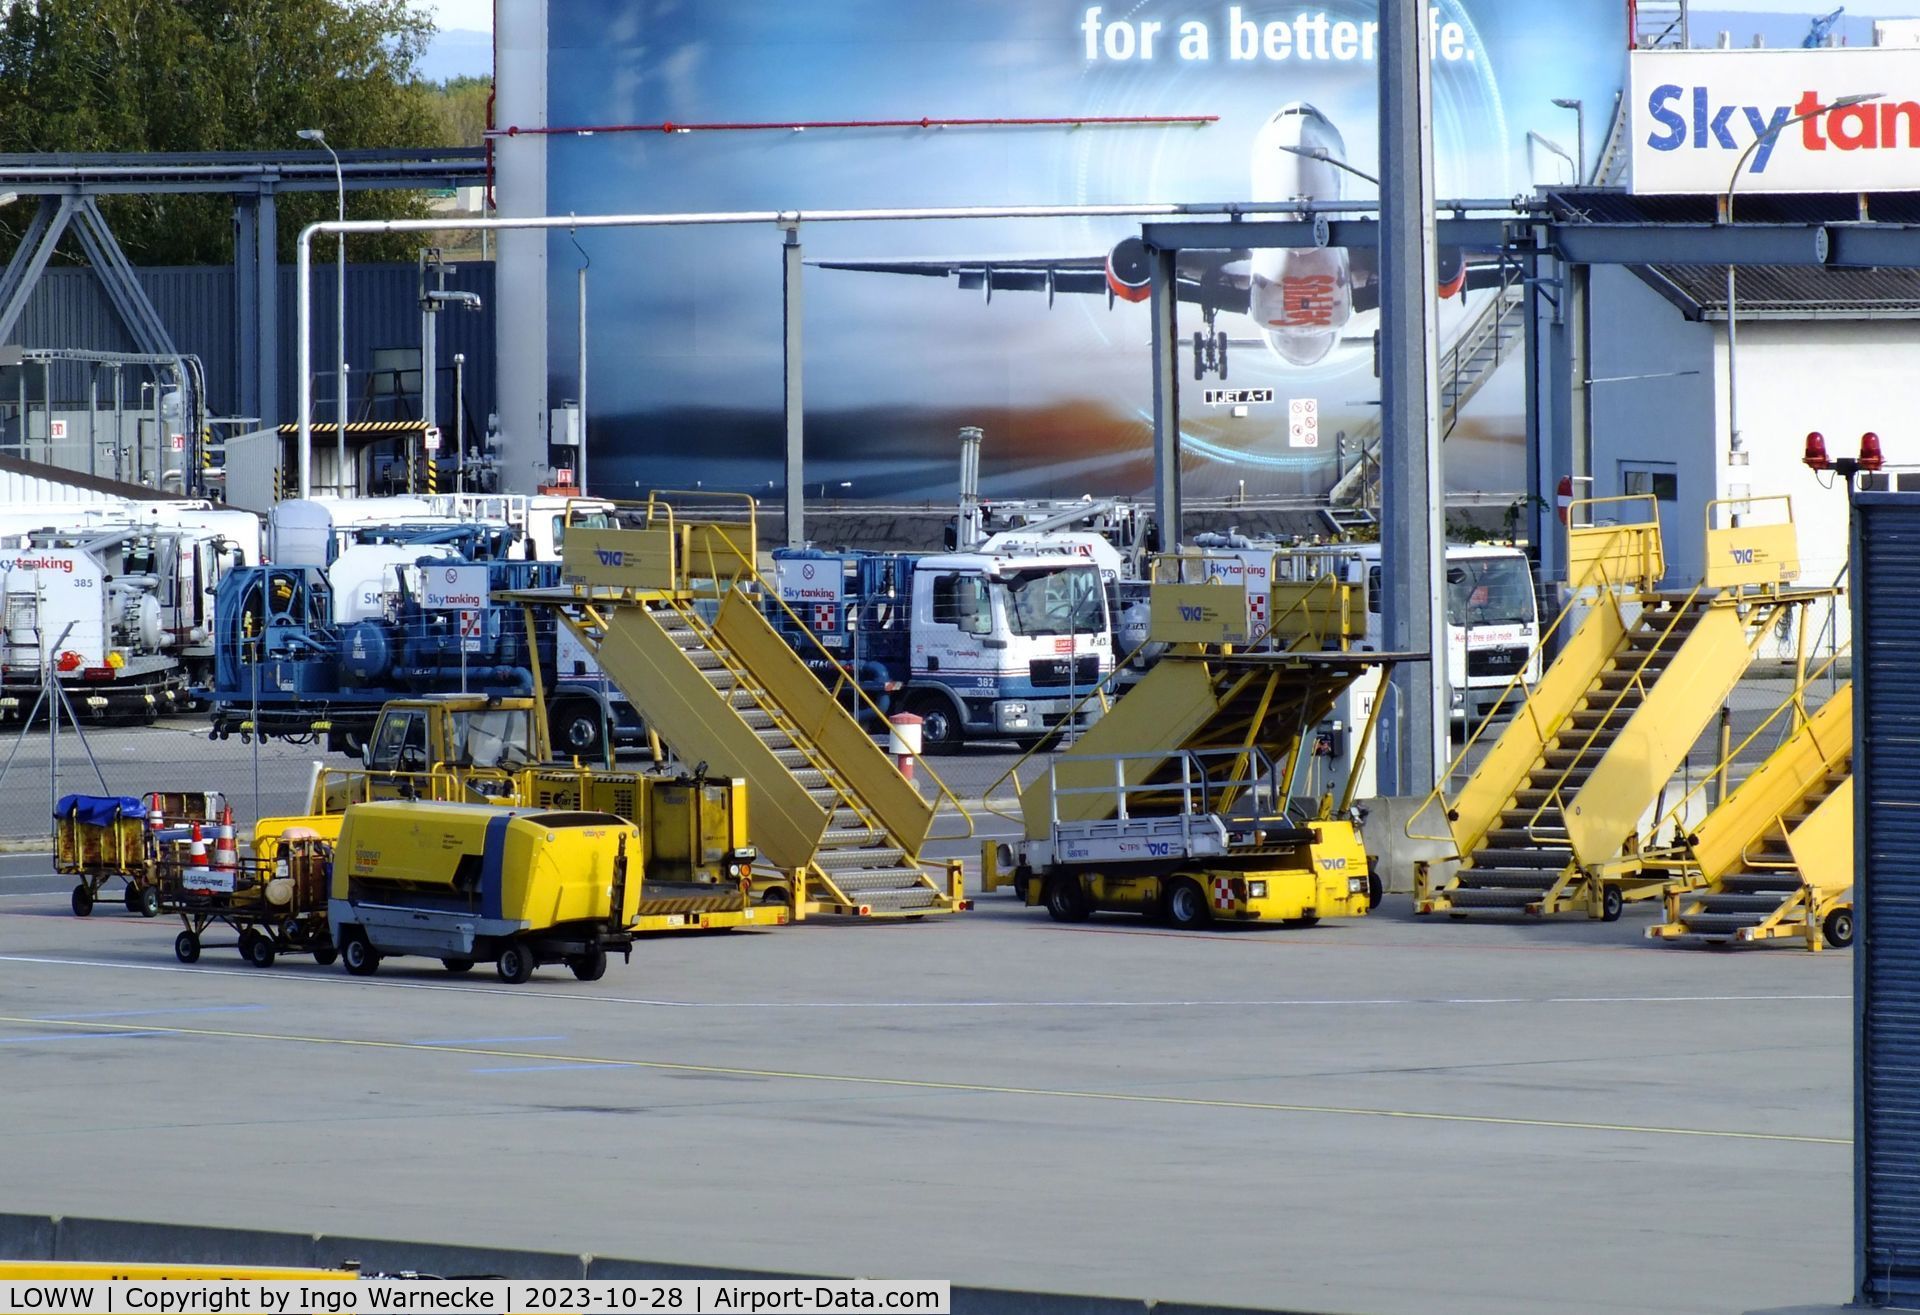 Vienna International Airport, Vienna Austria (LOWW) - towed open boarding stairs at Wien airport